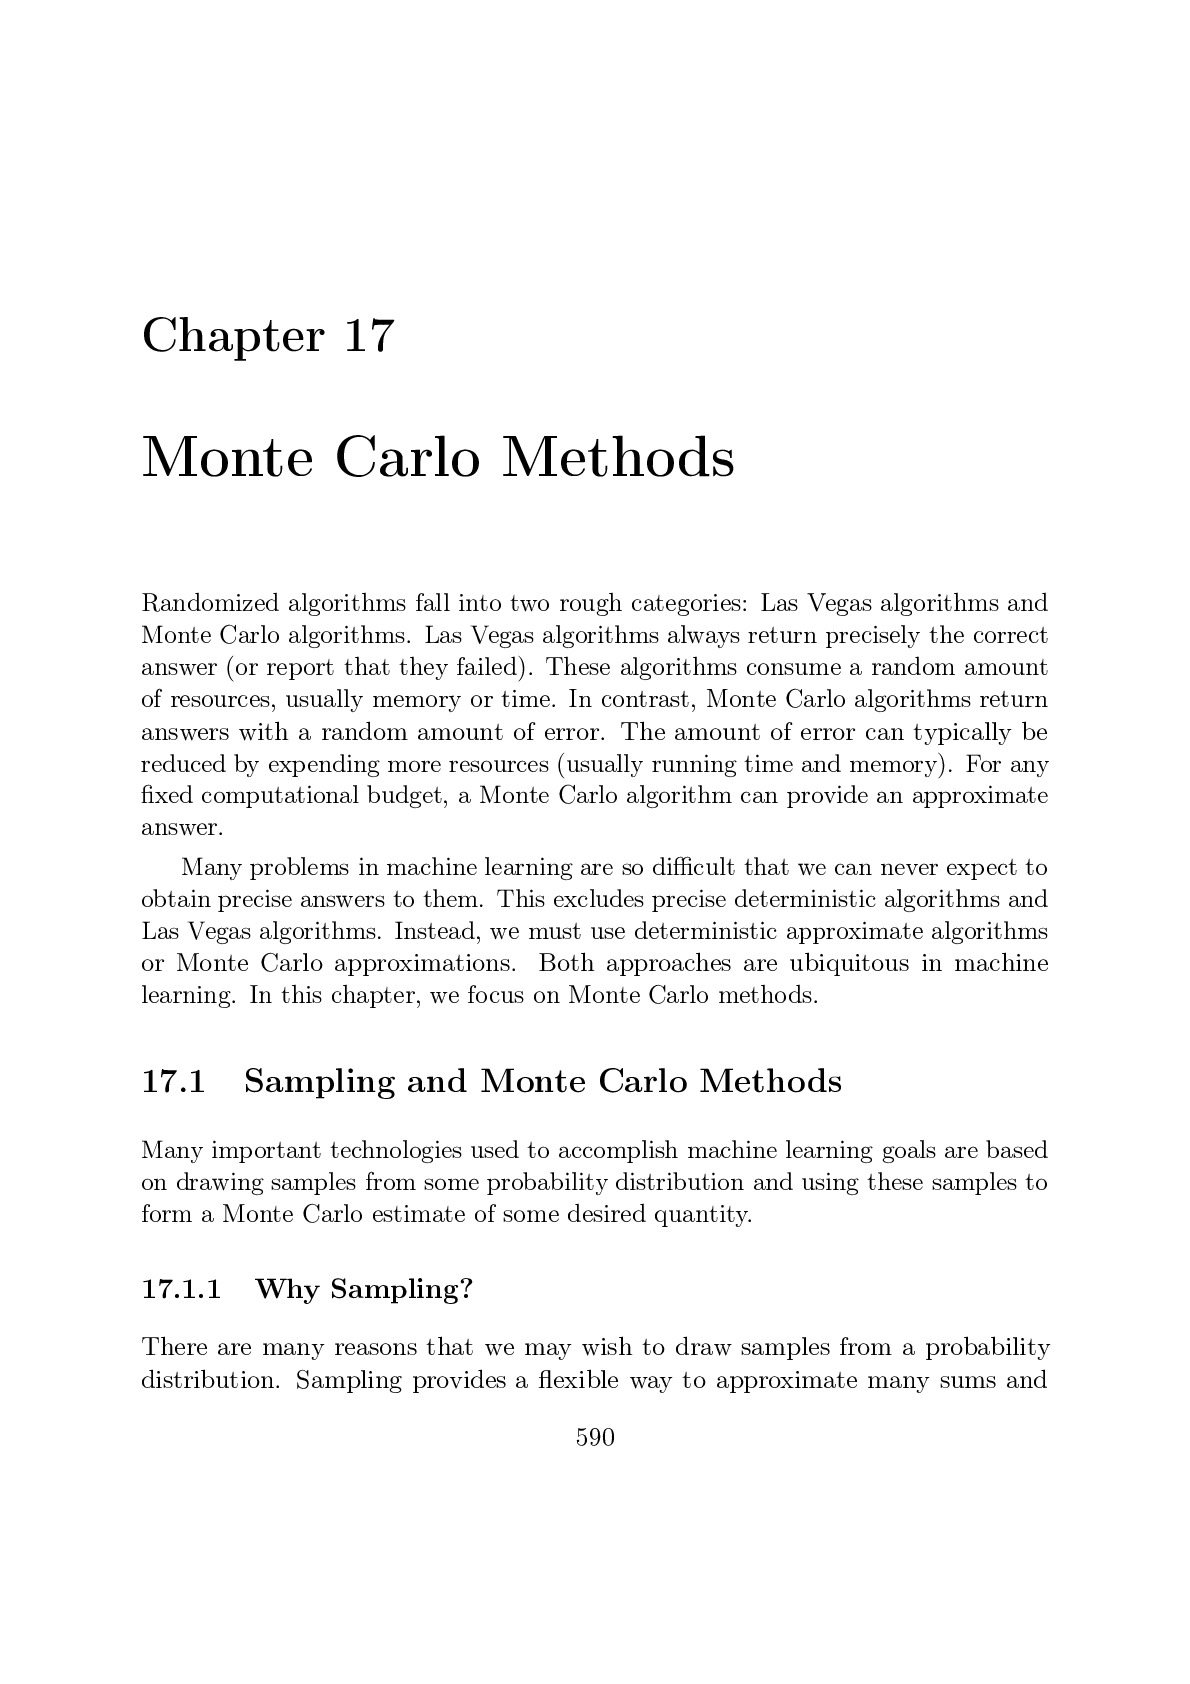 17 Monte Carlo Methods